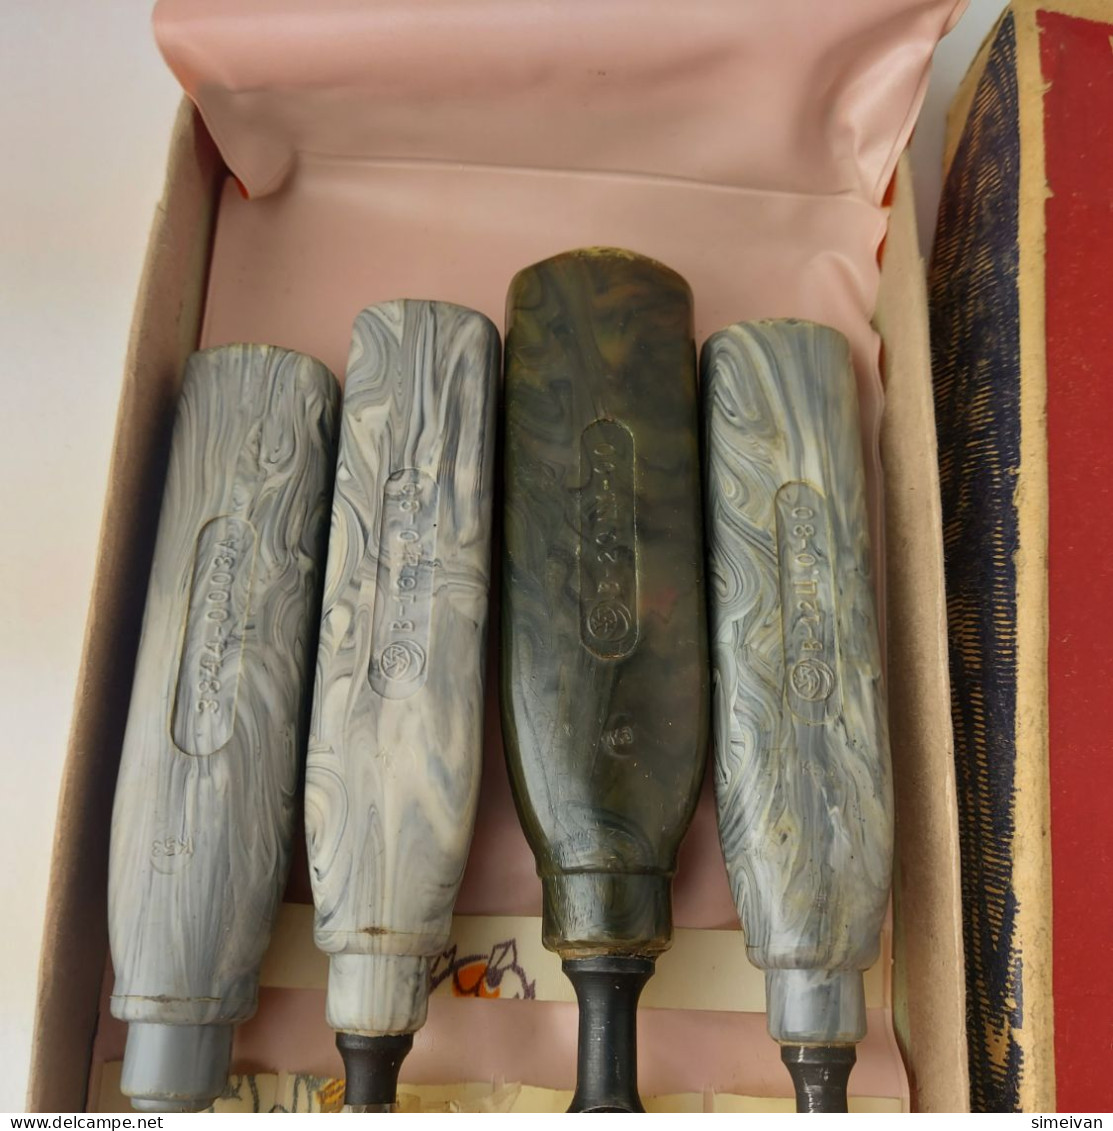 Vintage USSR Chisels for Wood Carving Set of 4 Soviet Woodworking Tool #5543